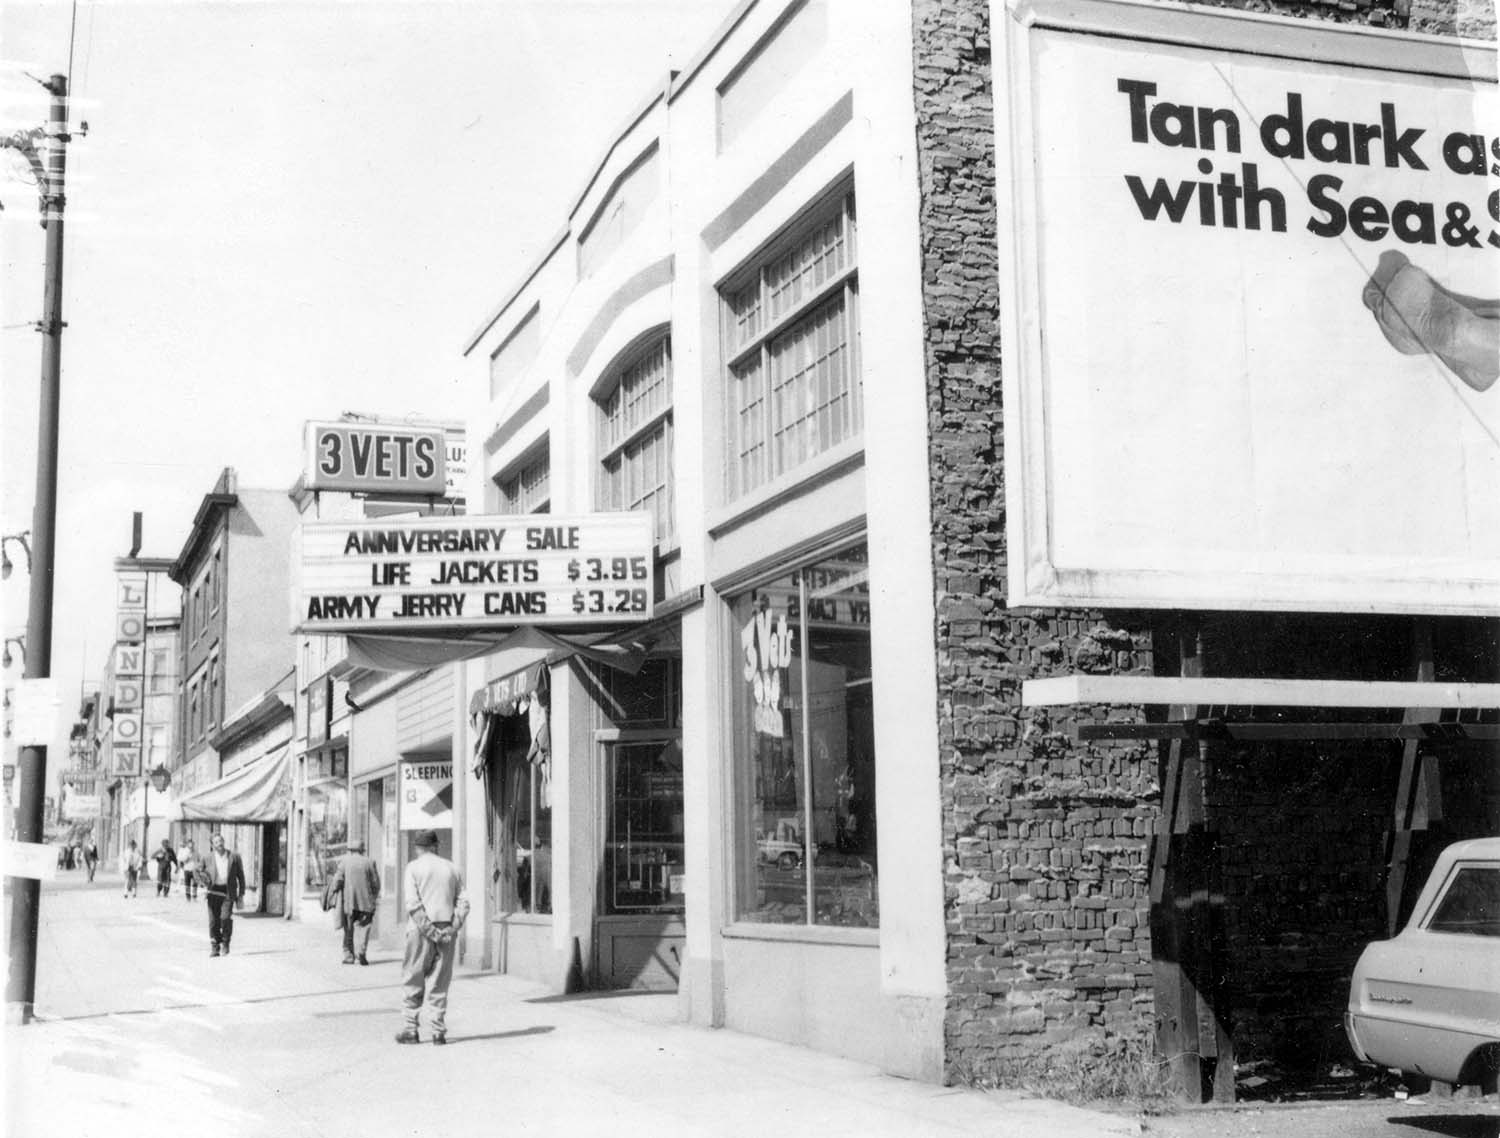 832 Main Street, 1968. Photograph shows 3 Vets War Surplus store. Reference code COV-S168-: CVA 203-18